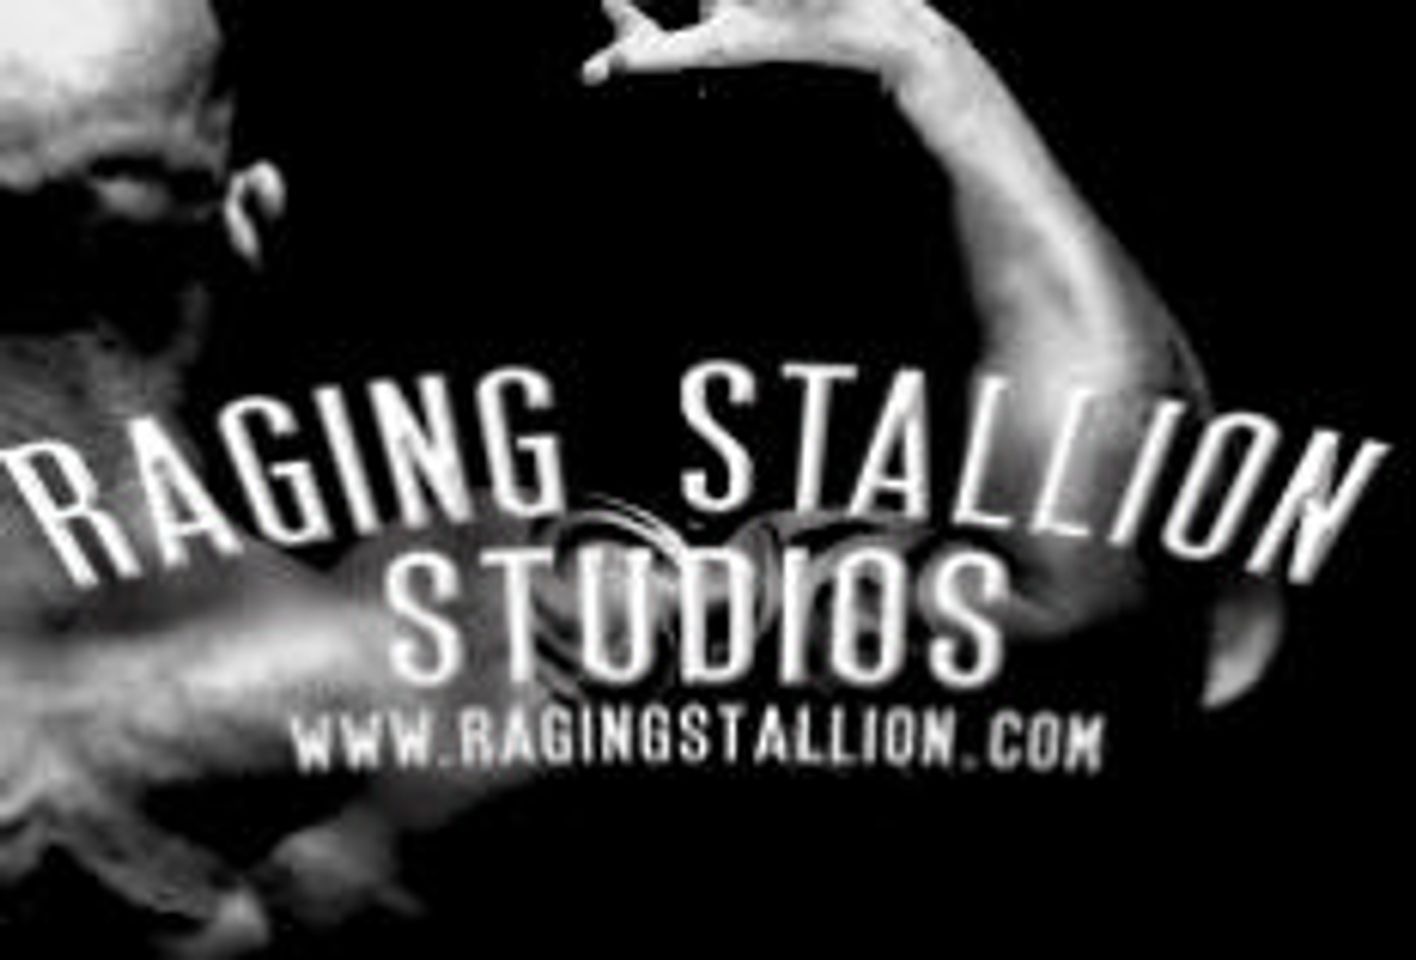 Raging Stallion Studios Opens European Division